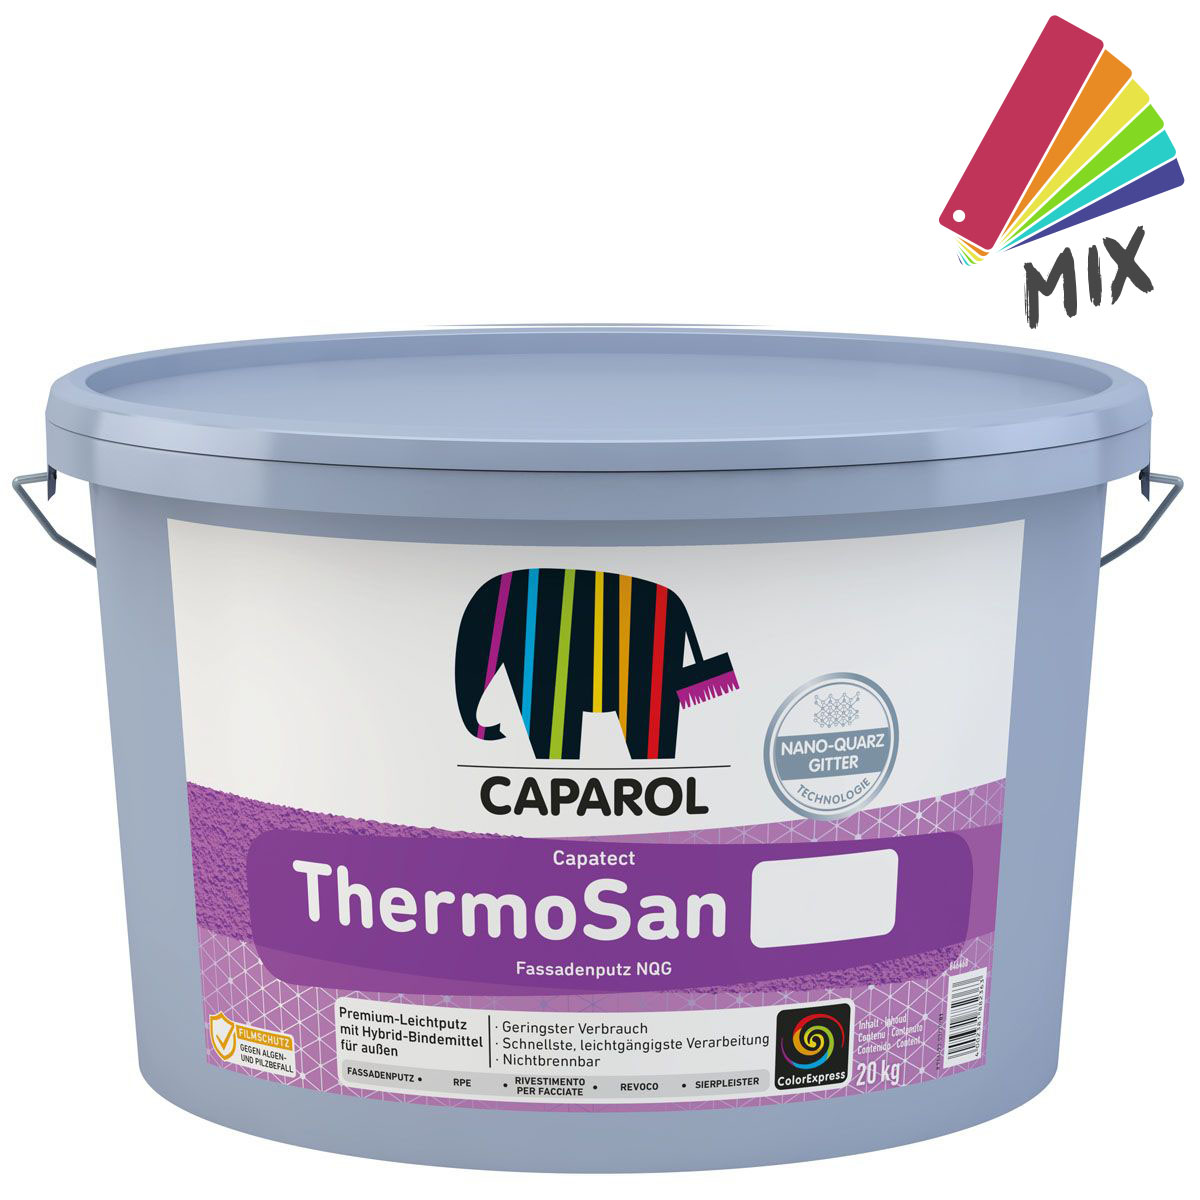 Caparol Capatect Thermosan Fassadenputz NQG K15 (1,5mm) 20kg, MIX PG S